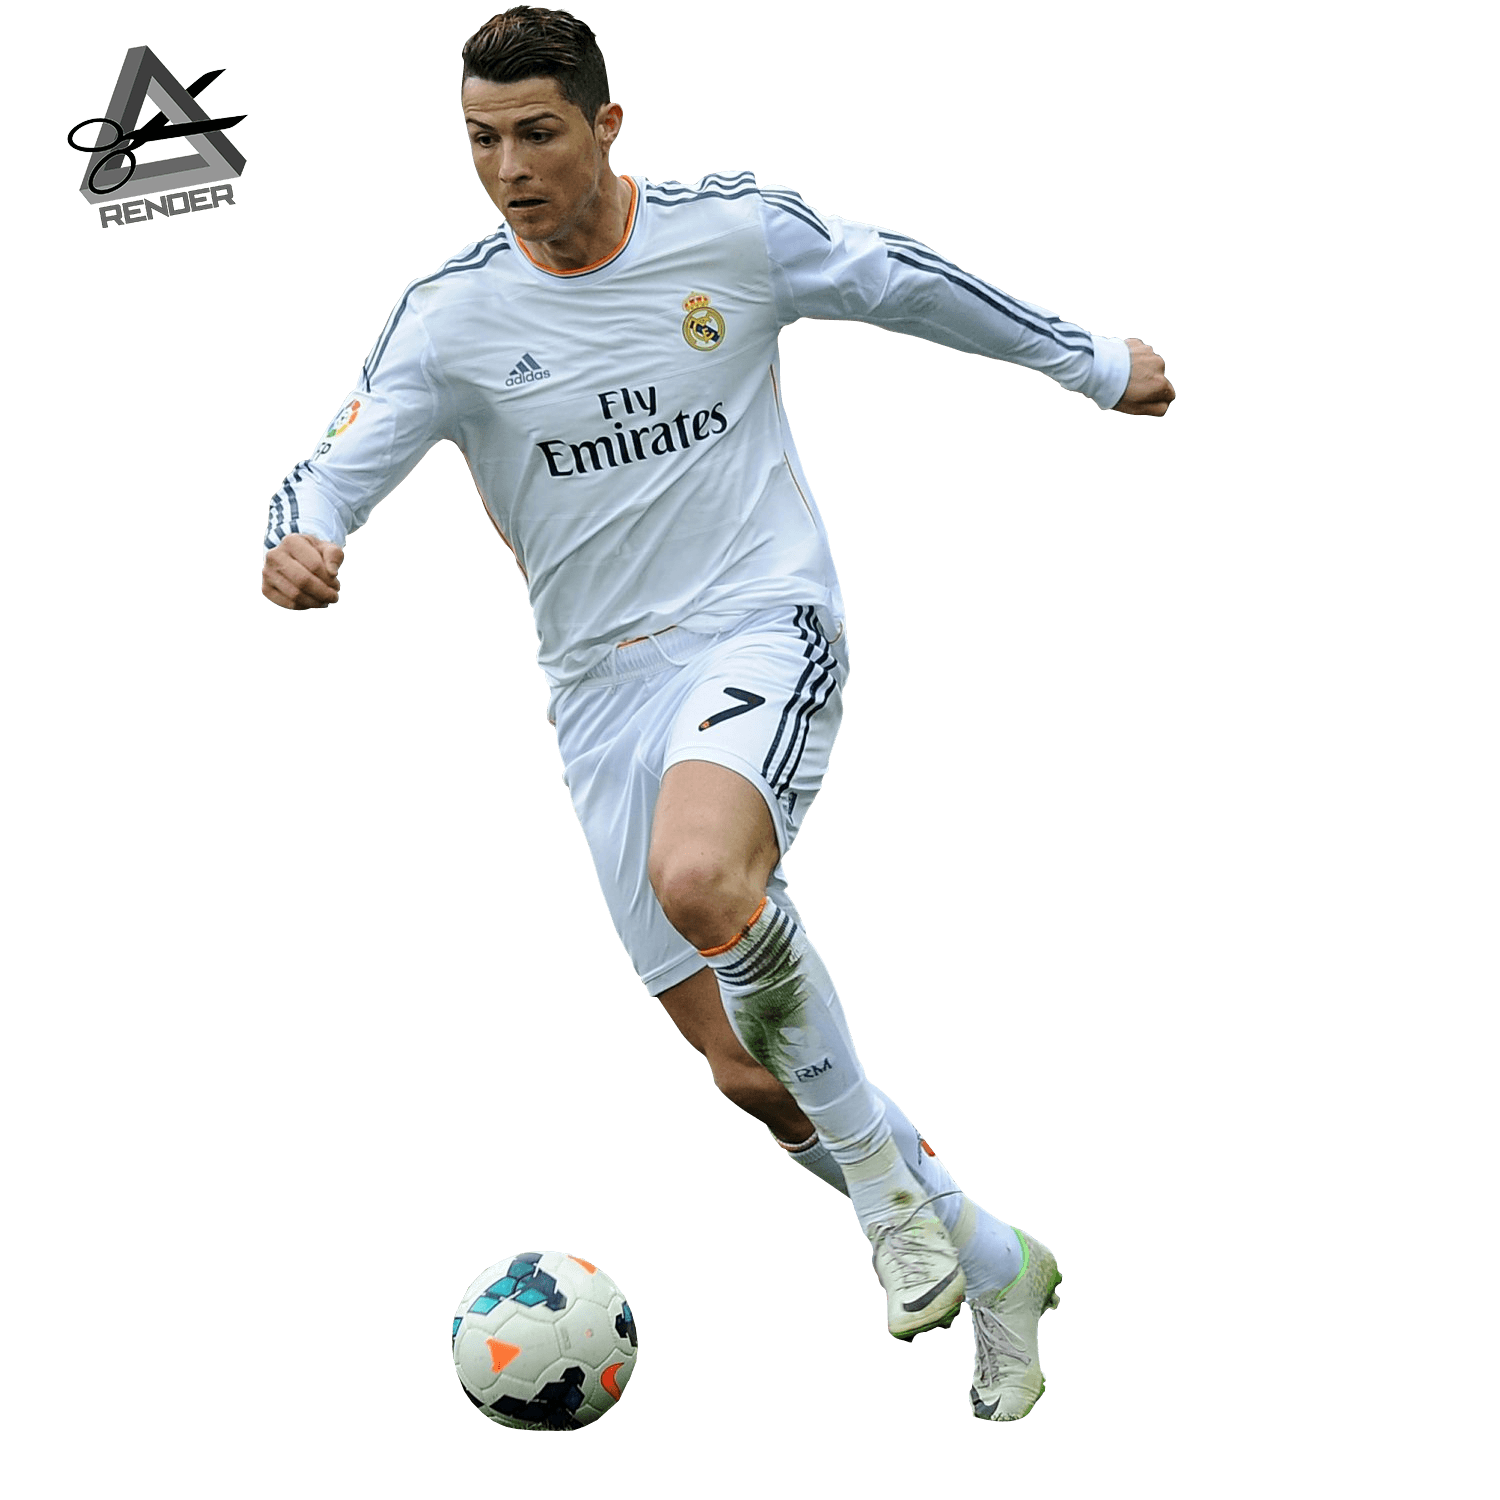 Cristiano Ronaldo Wallpapers Image - Cristiano Ronaldo Png 2015 - HD Wallpaper 